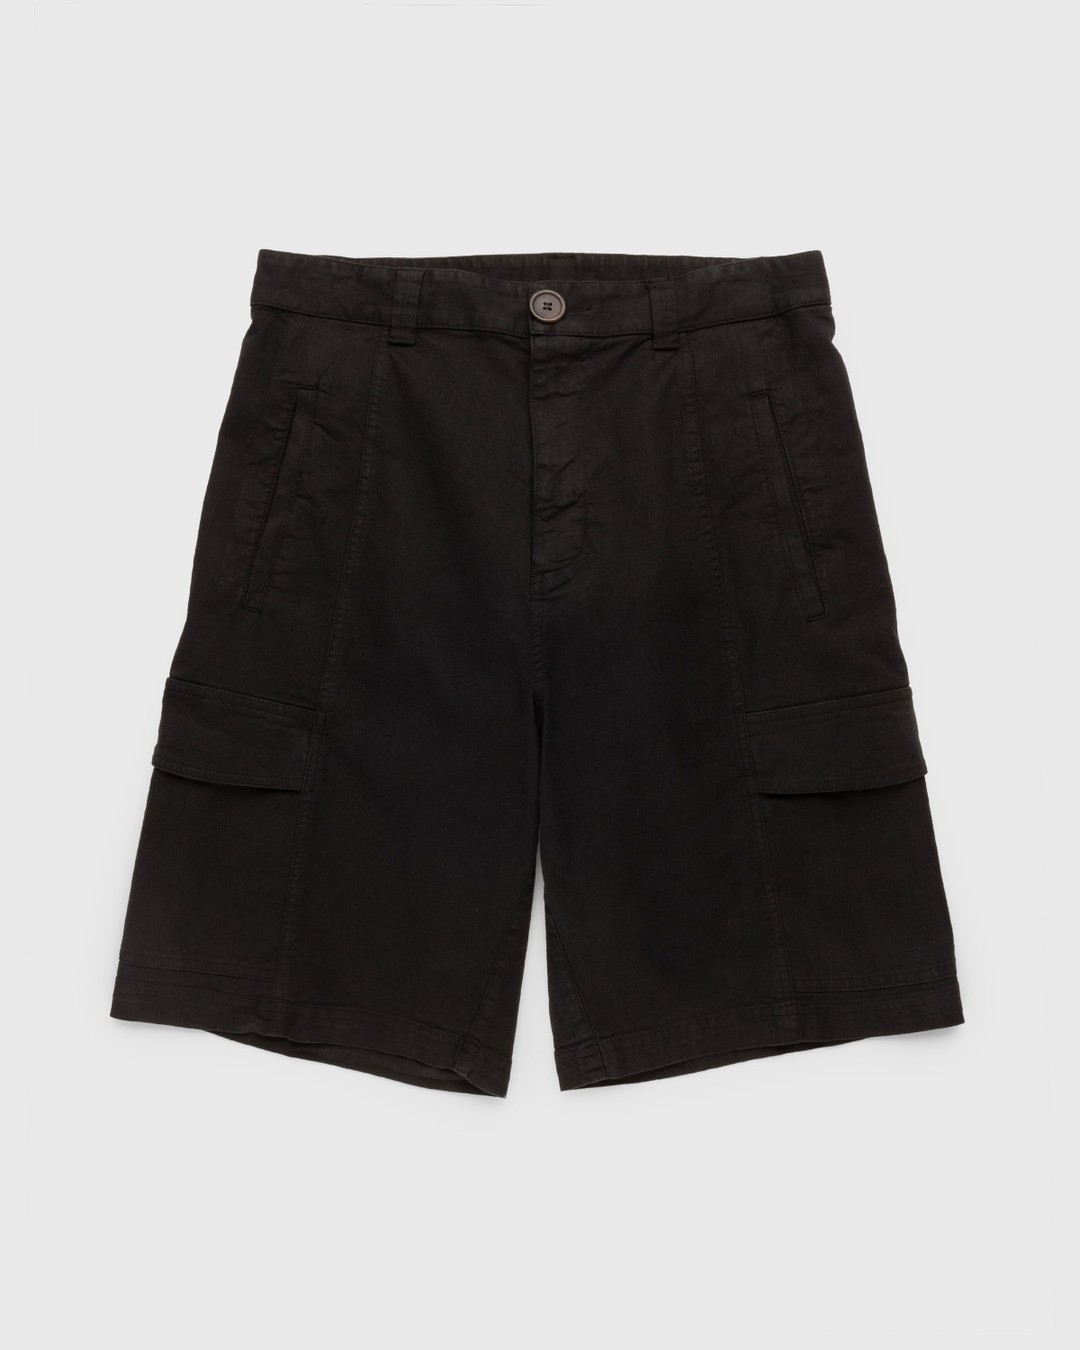 Winnie New York – Linen Cargo Shorts Black - Shorts - Black - Image 1